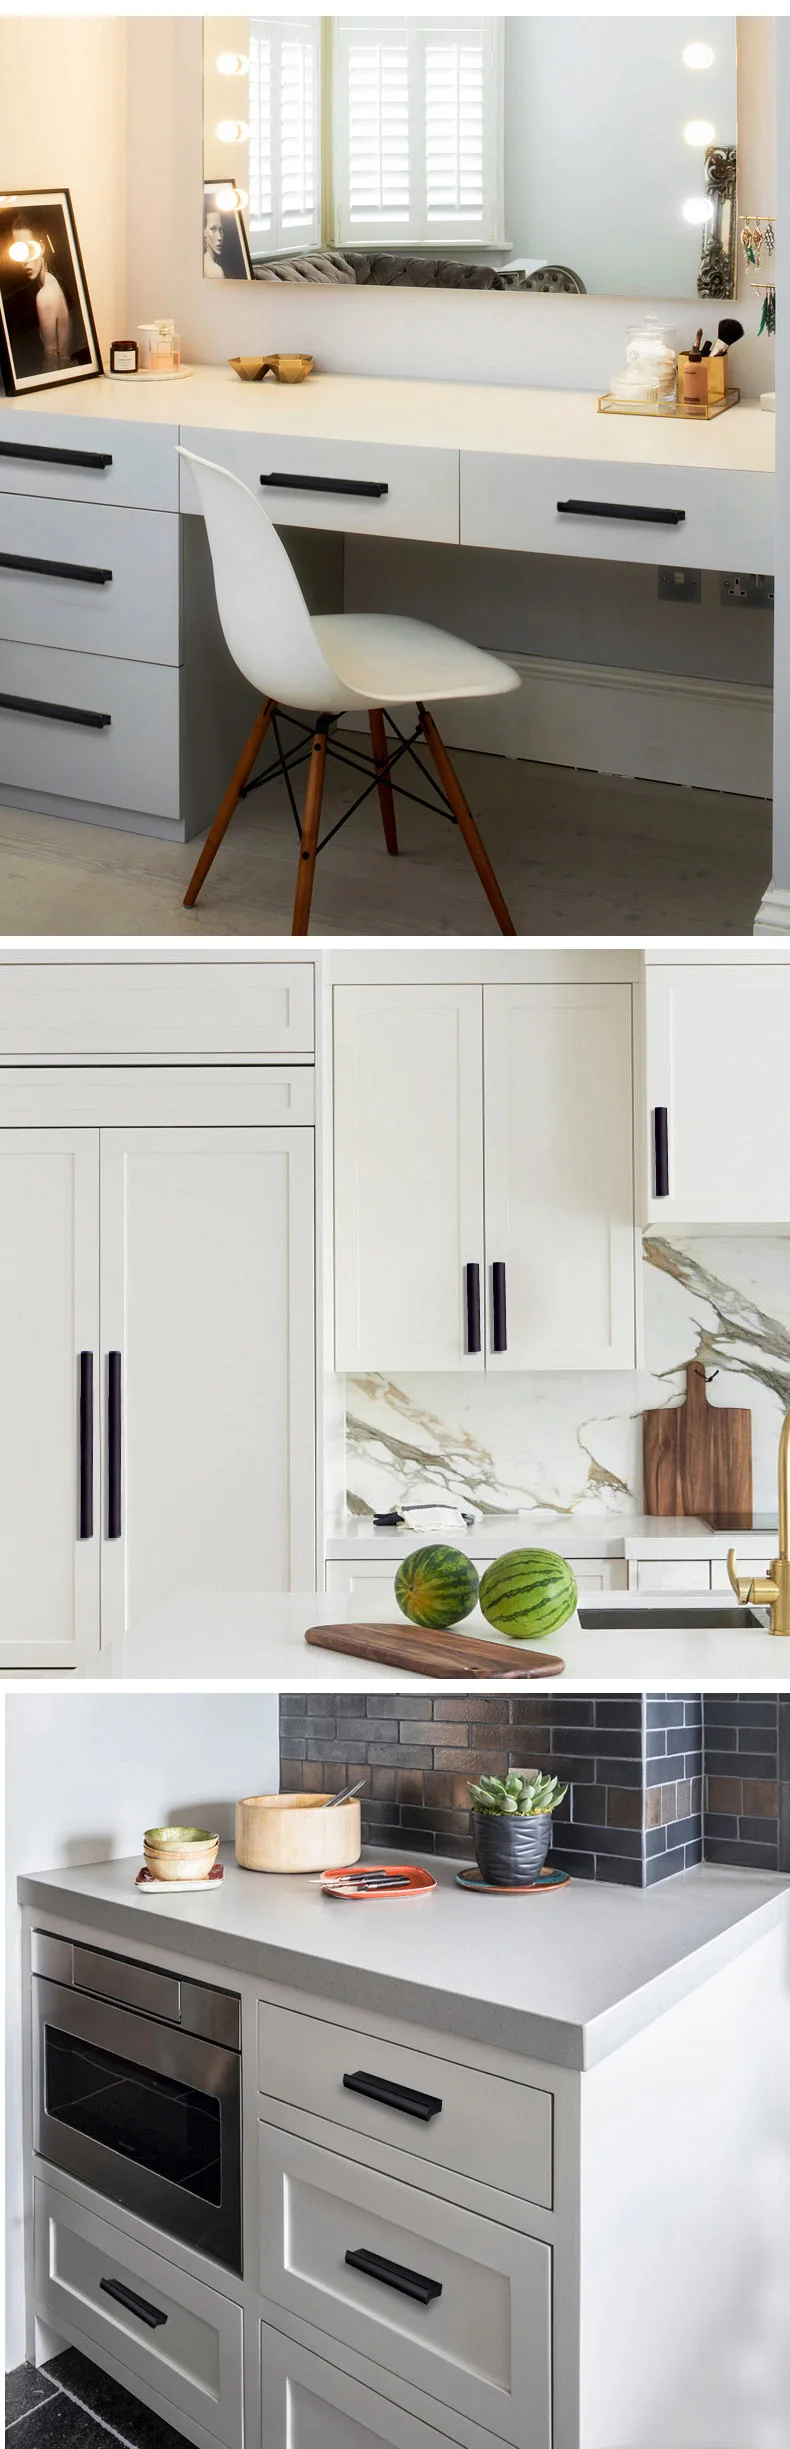 WV Kitchen Cabinet Handles and Pulls Black Silver Dressers Closet Furniture Door Handles Aluminum Drawer and Knobs Hardwares